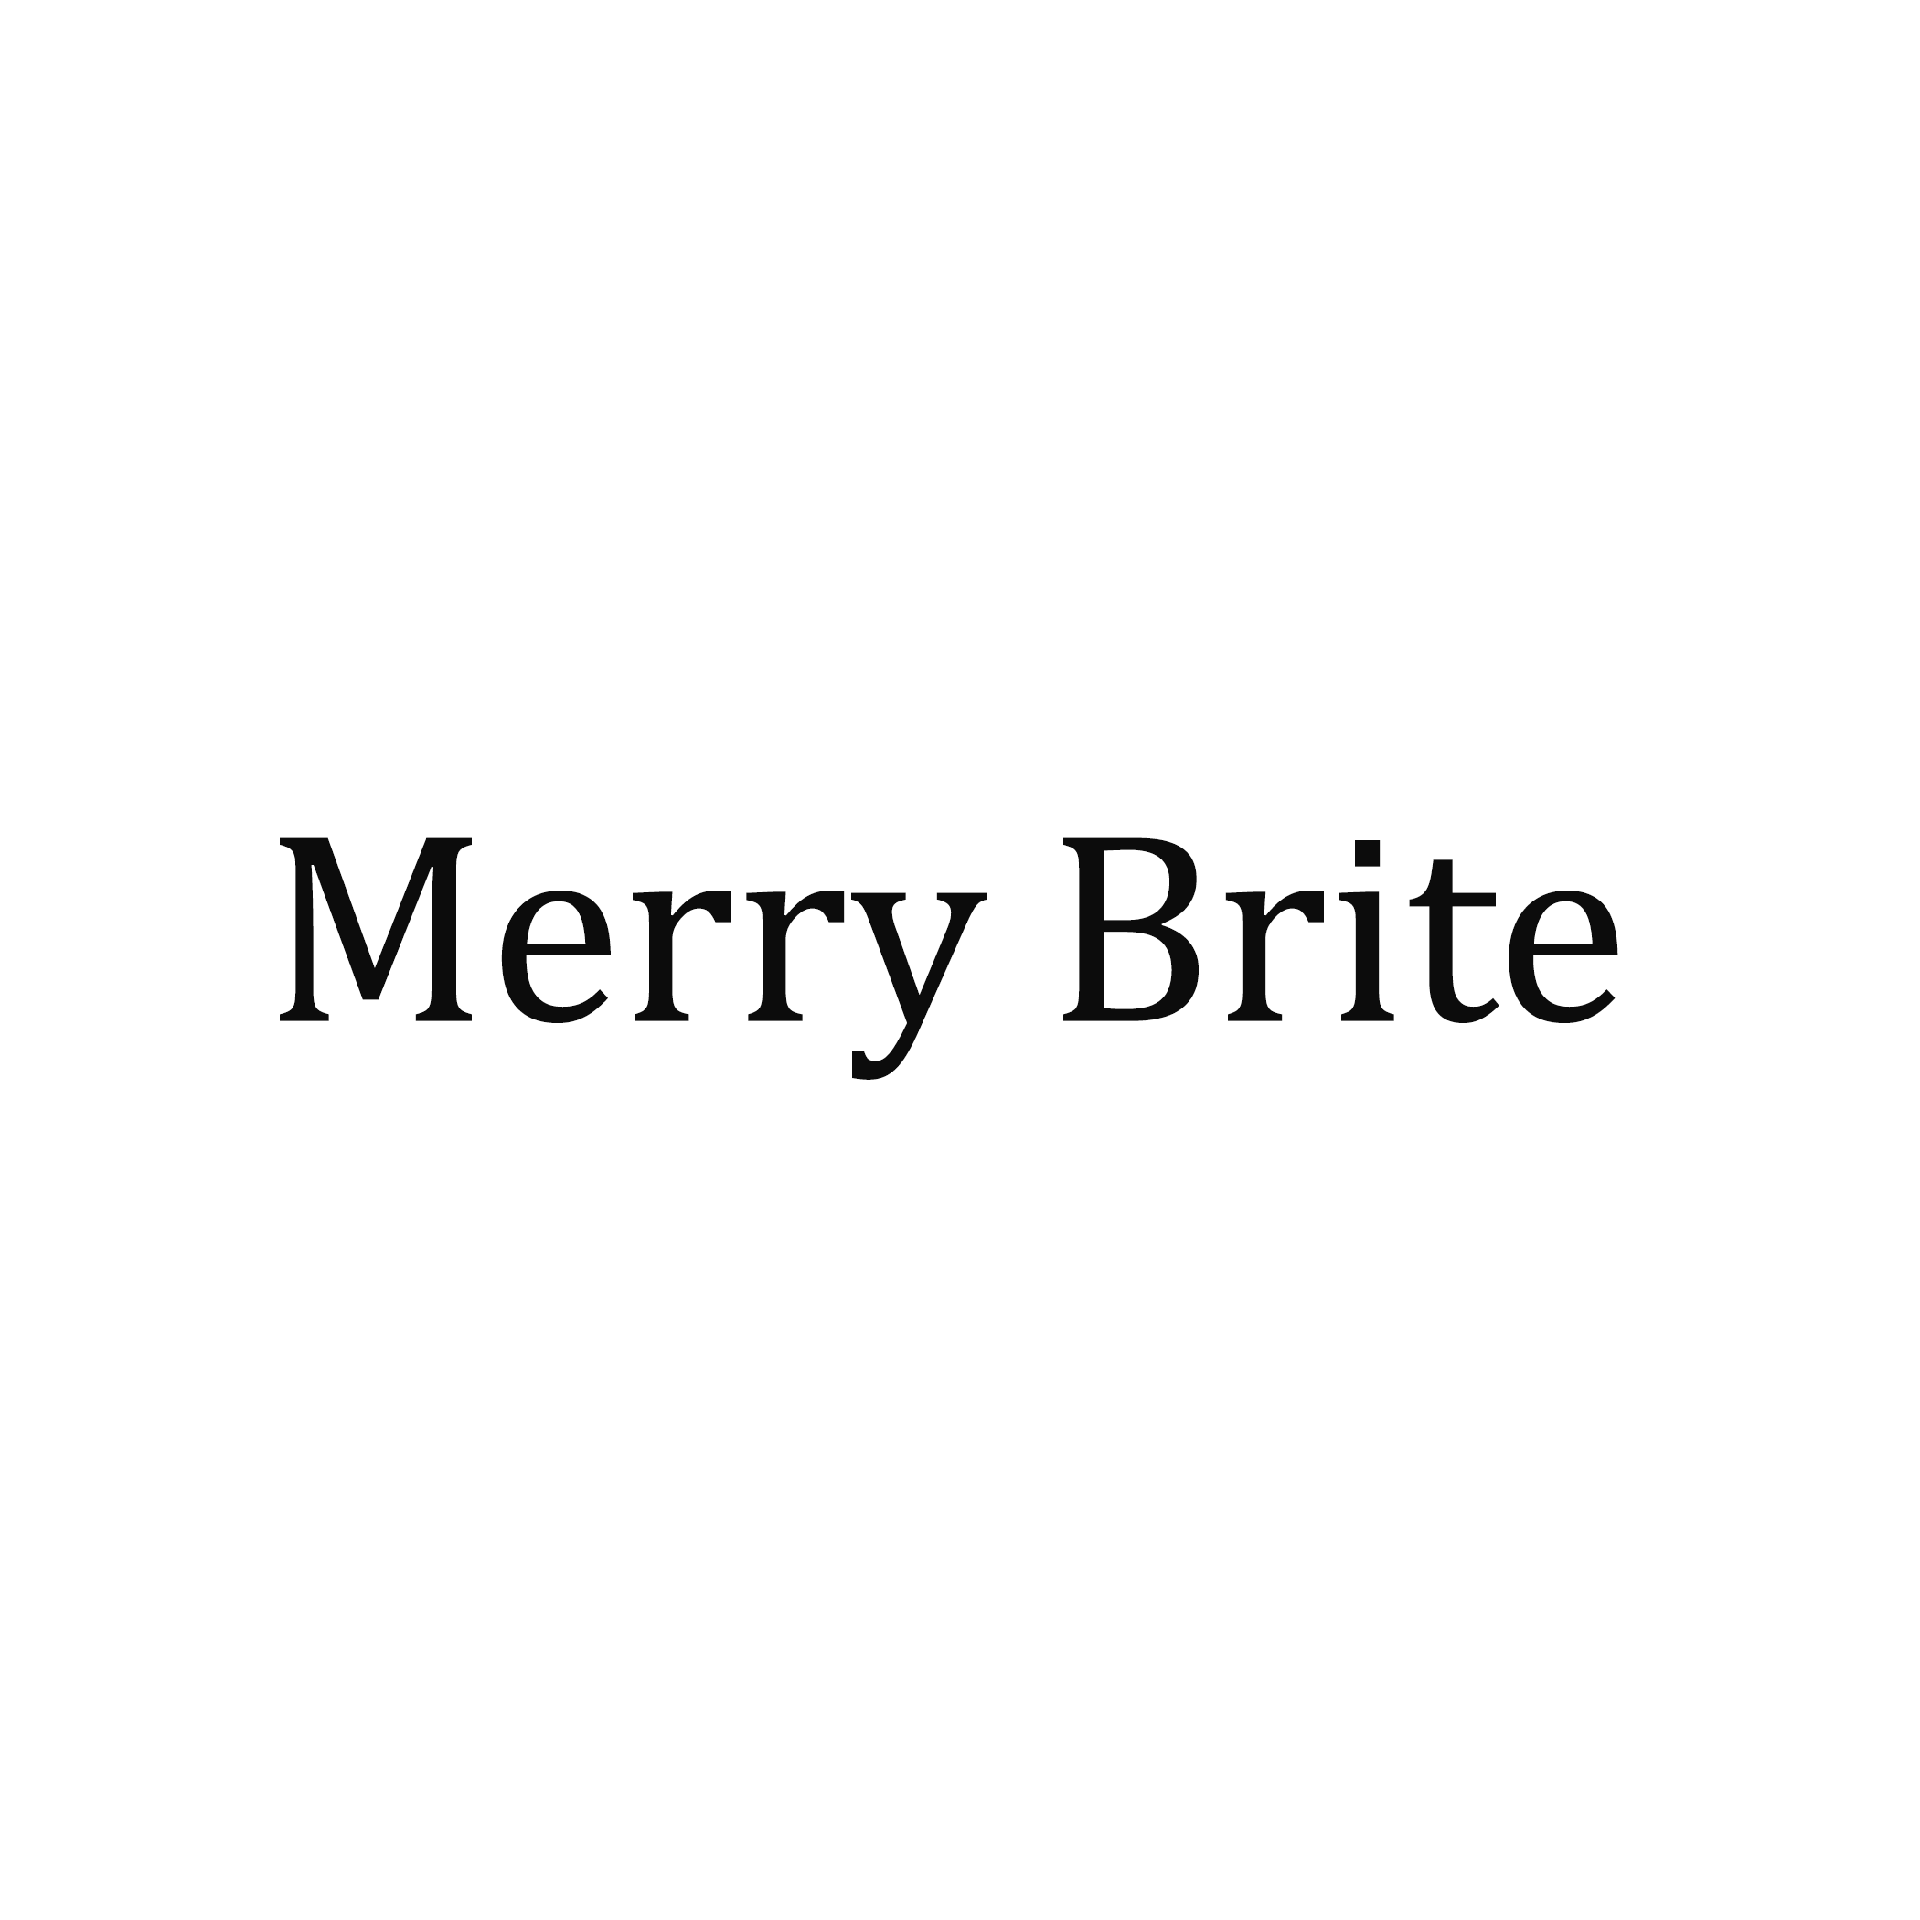 Merry Brite